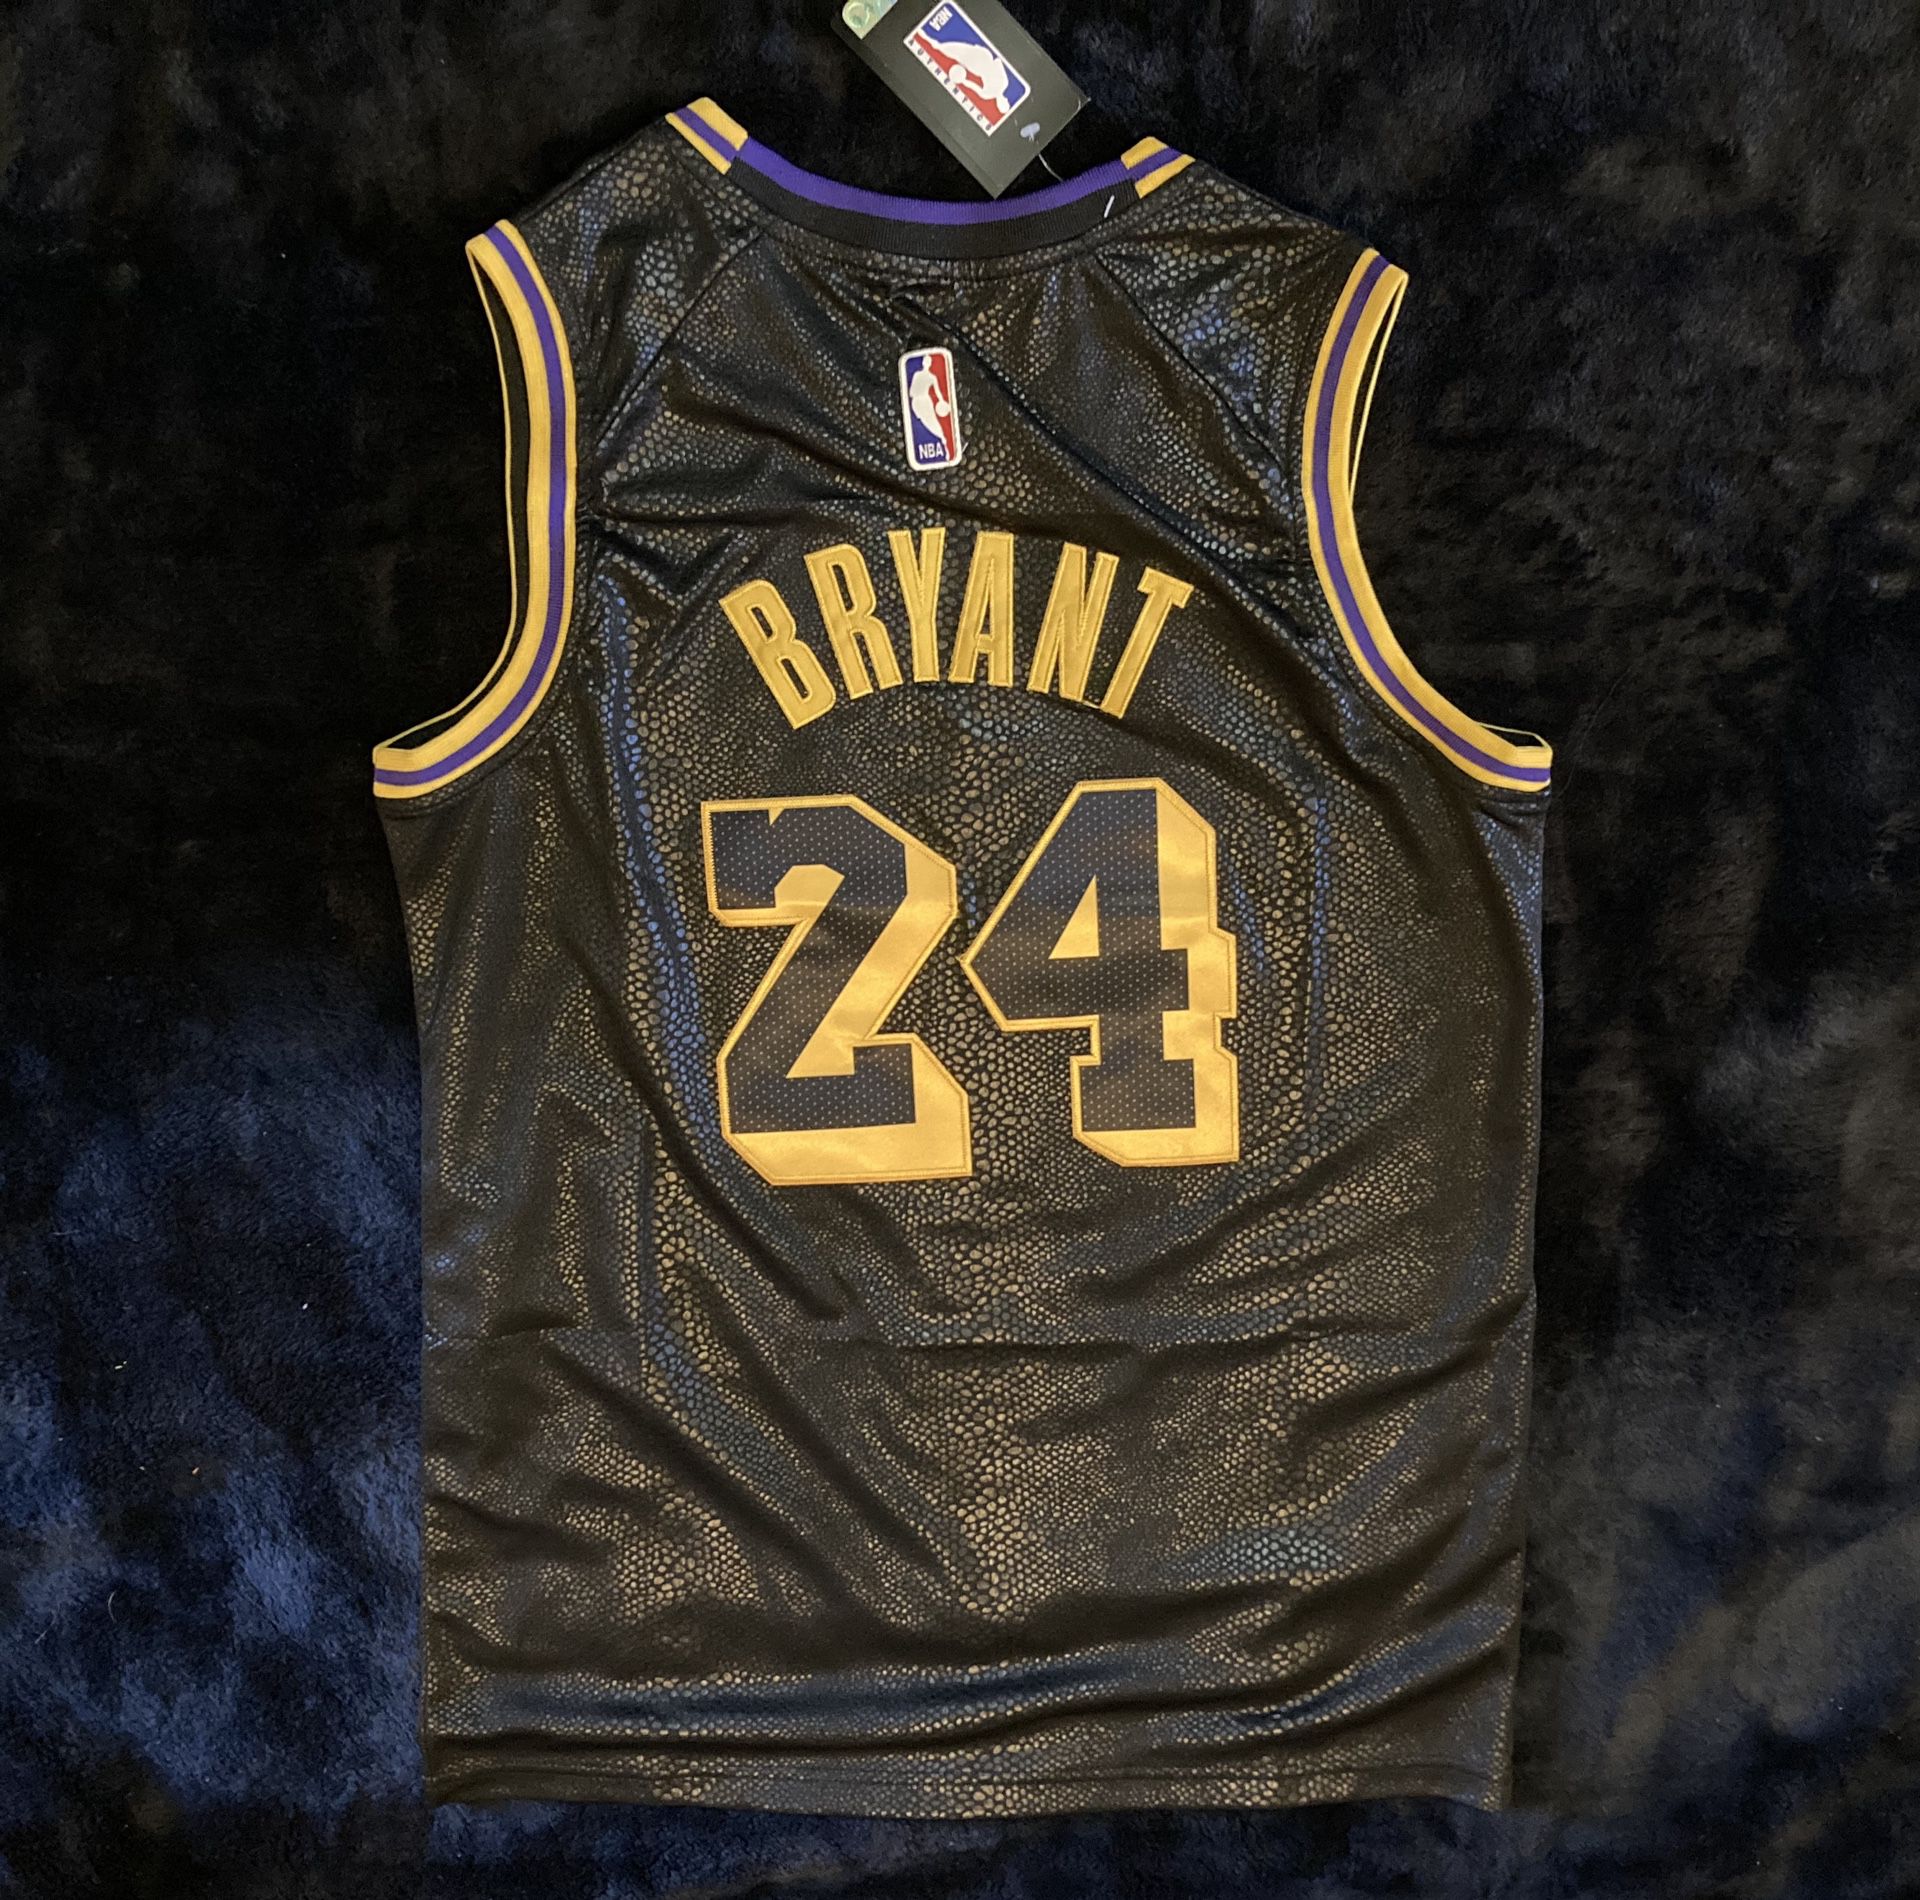 Nike Los Angeles Lakers Kobe Bryant Black Mamba City Edition Swingman  Jersey Men's Large for Sale in Irvine, CA - OfferUp